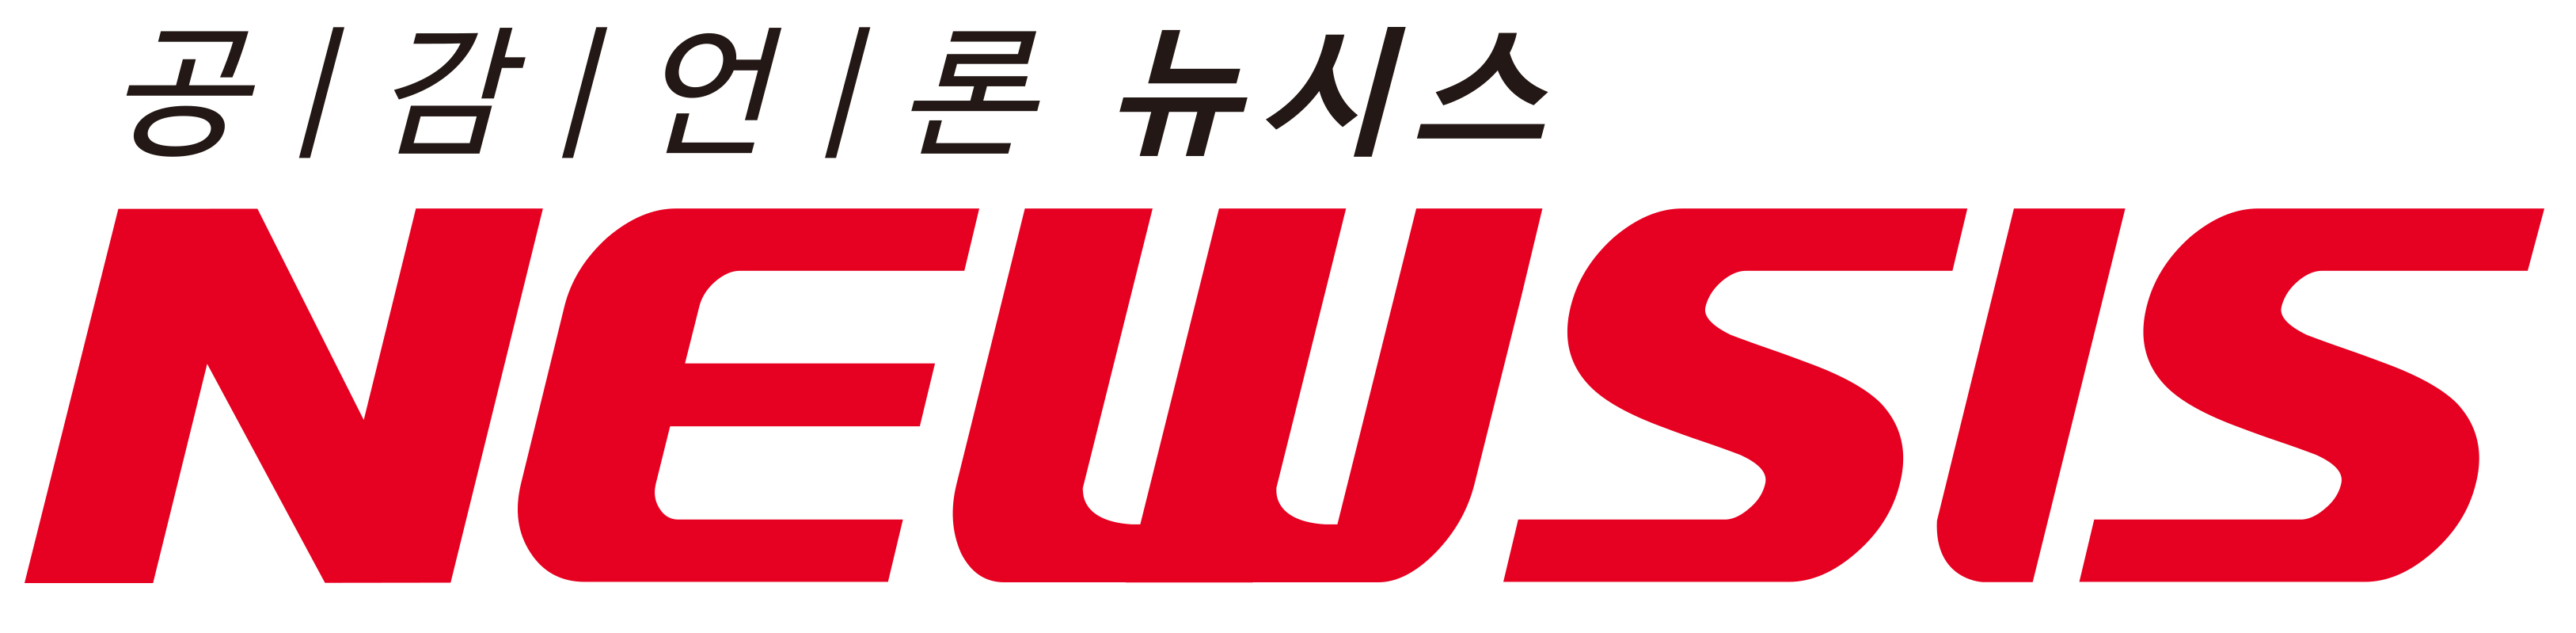 NEWSIS logo.jpg